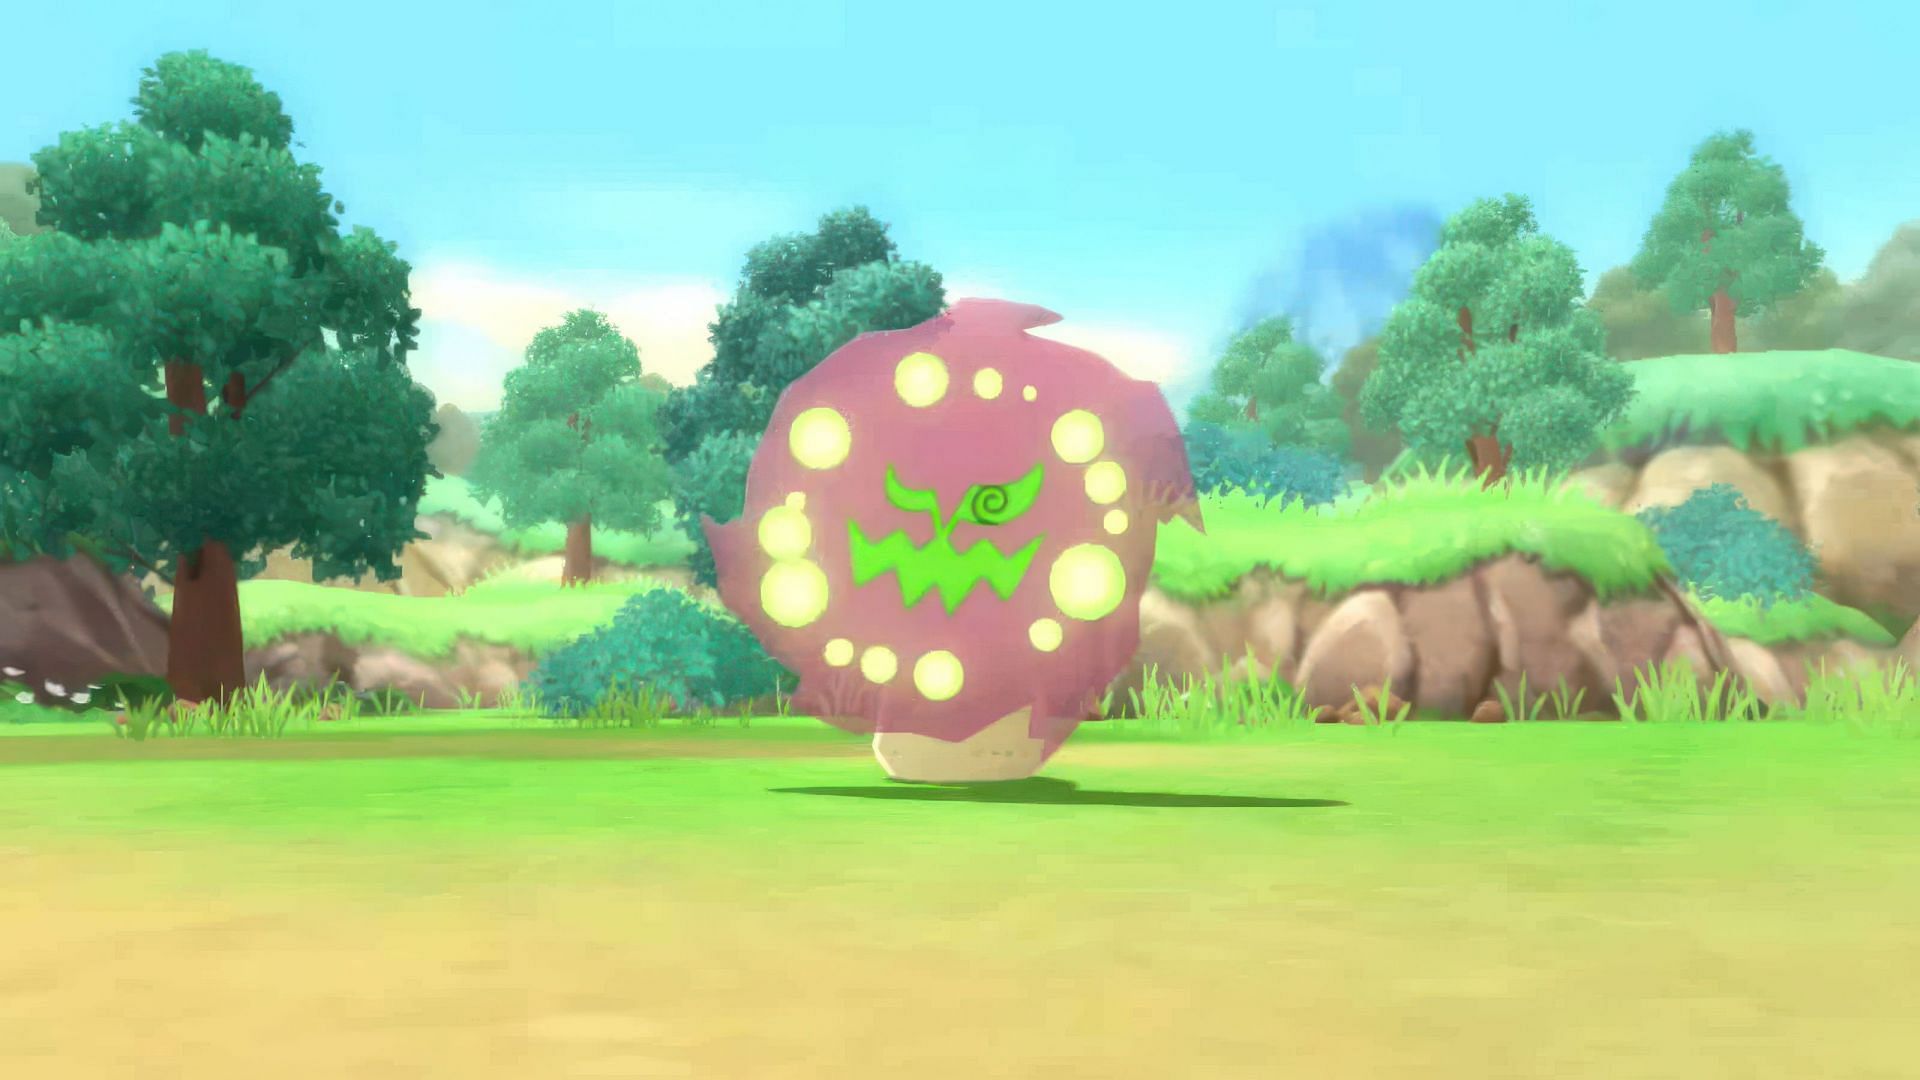 How to Catch Shiny Spiritomb in Pokemon GO - Prima Games